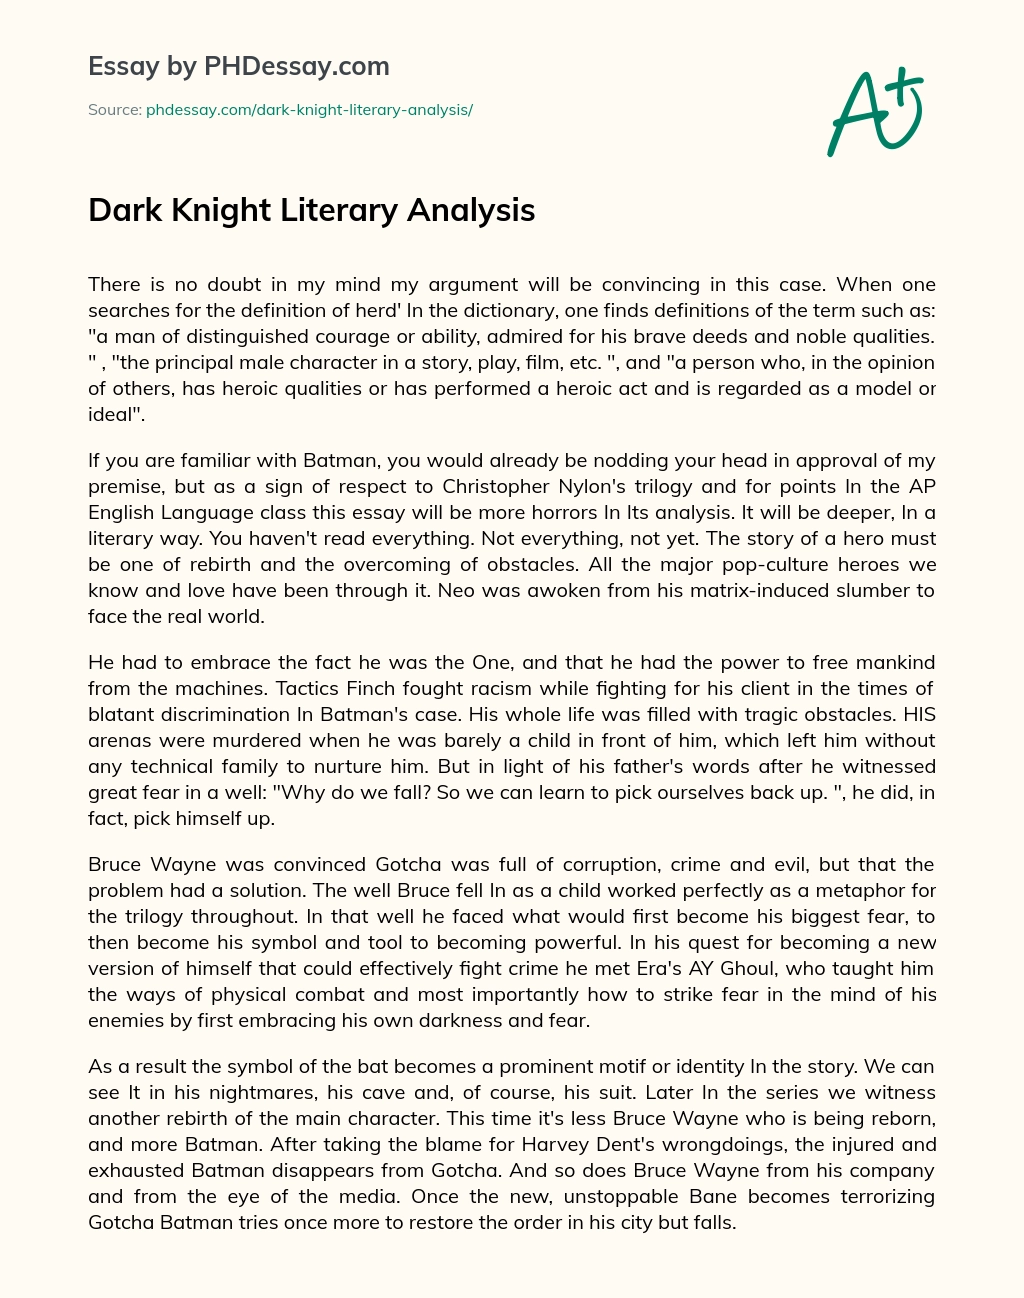 Dark Knight Literary Analysis essay